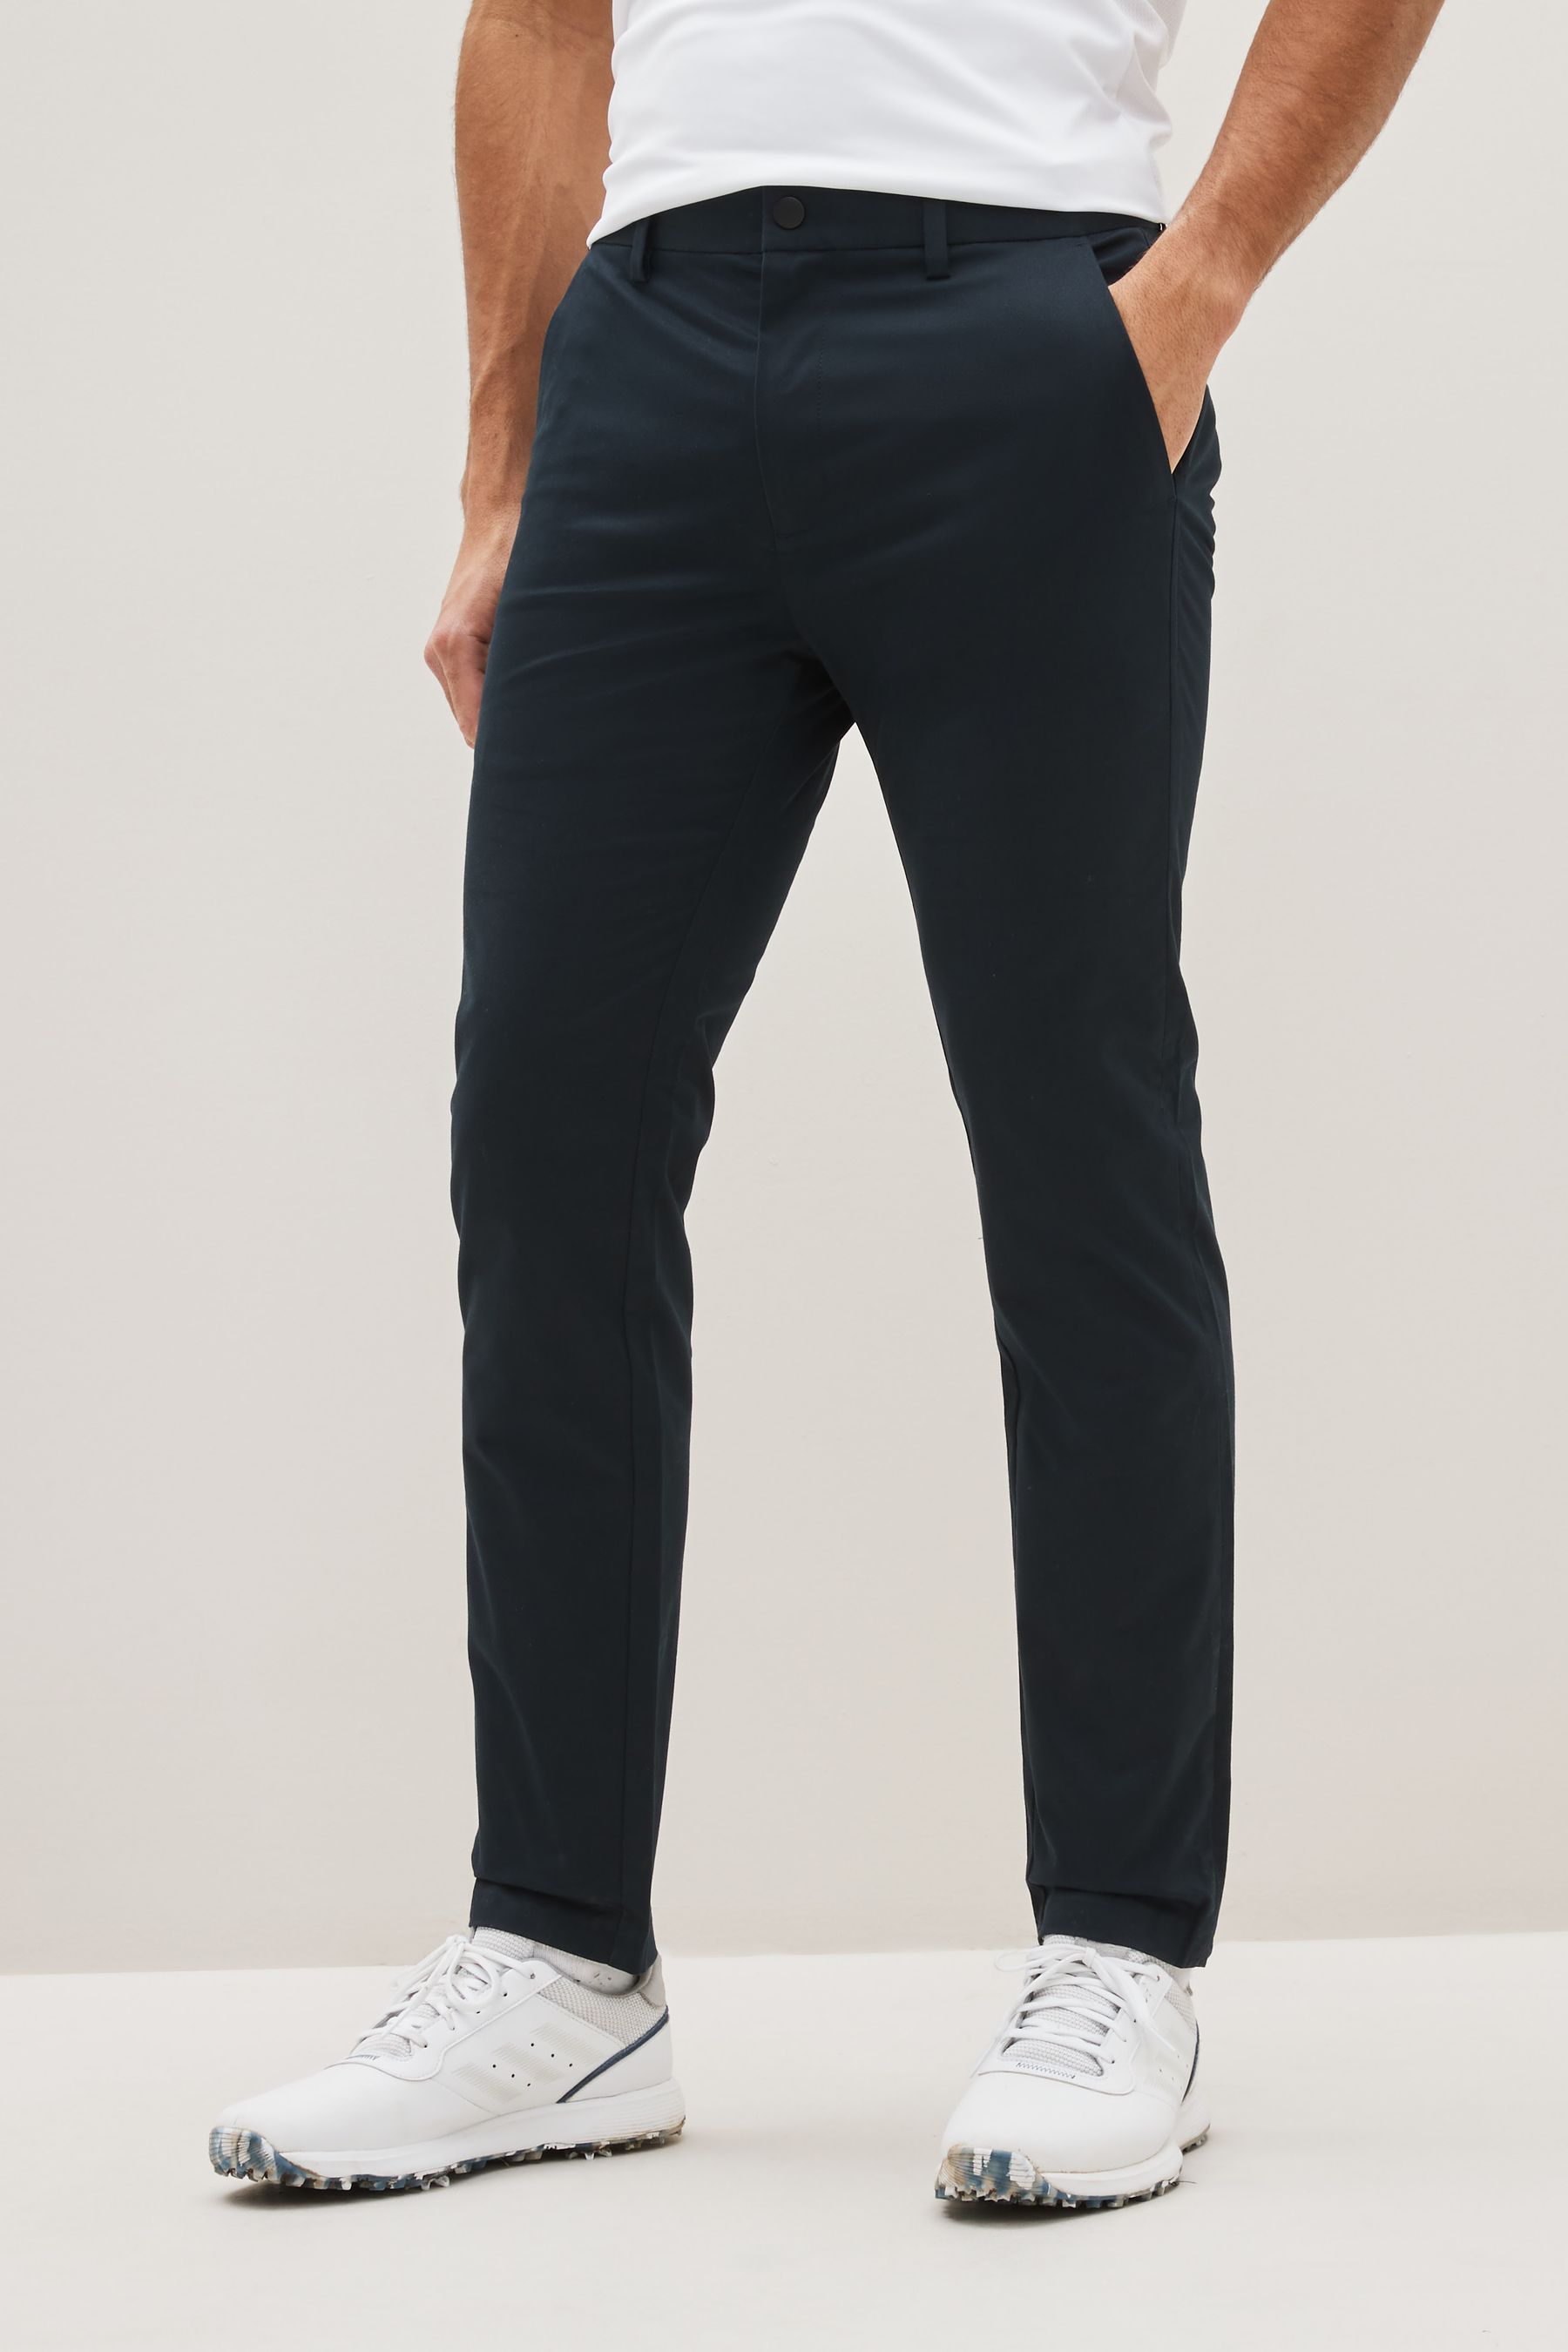 Buy Mens Fashion Athletic Joggers Pants - Sweatpants Trousers Cotton Cargo  Pants Mens Long Pants, Green, Medium at Amazon.in